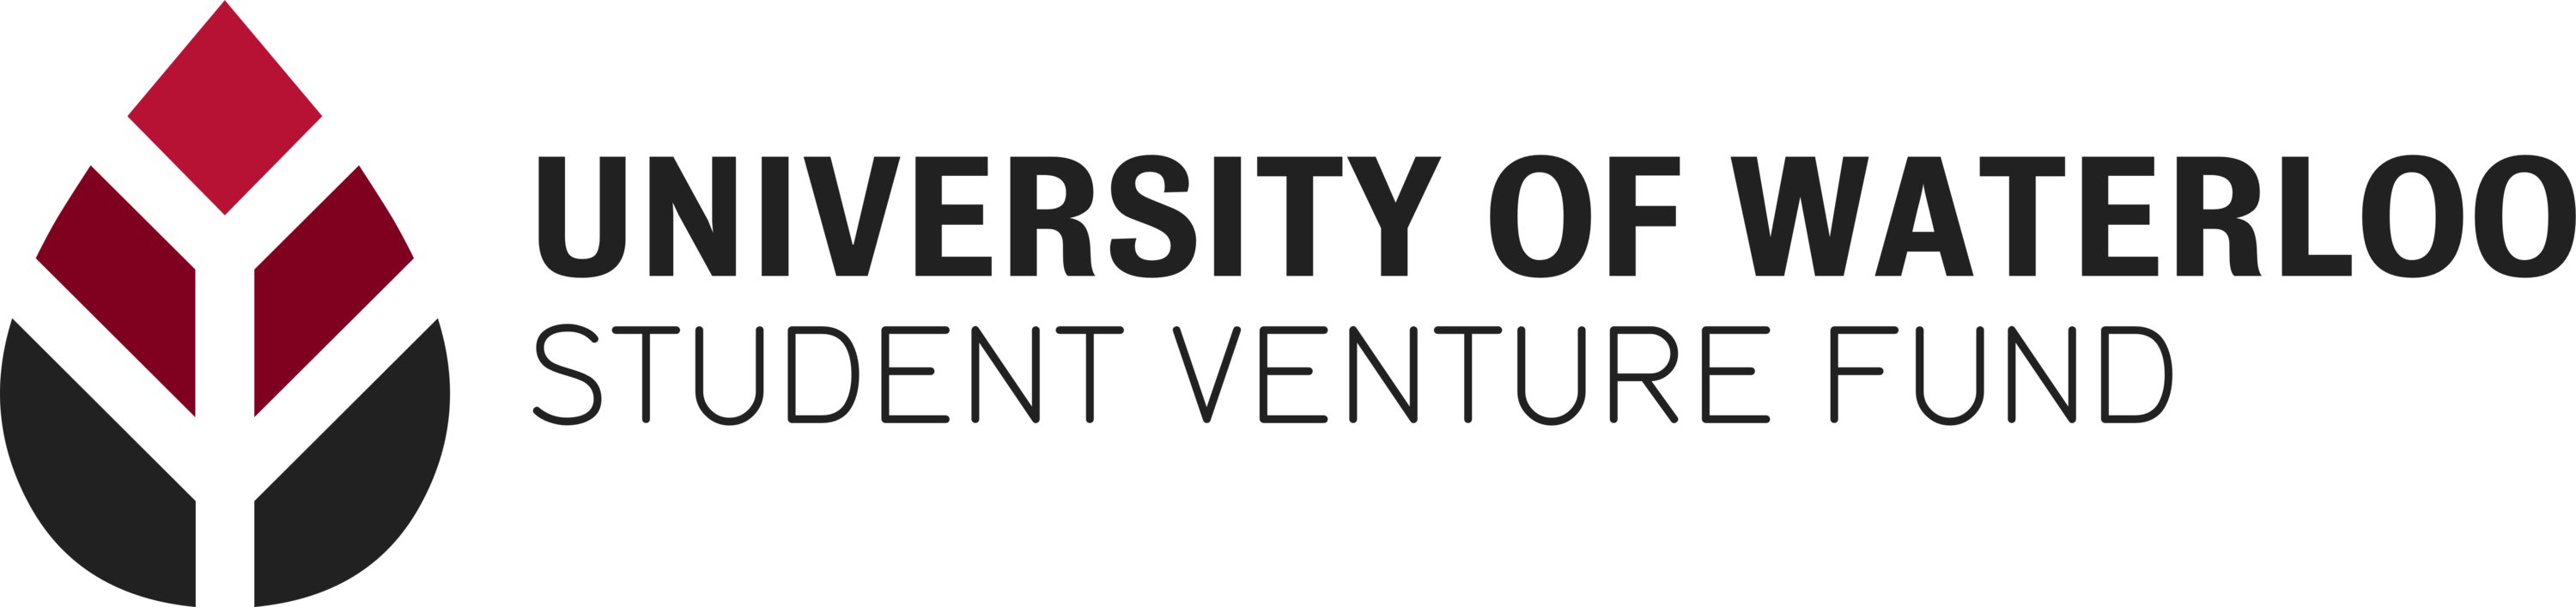 Student Venture Fund logo